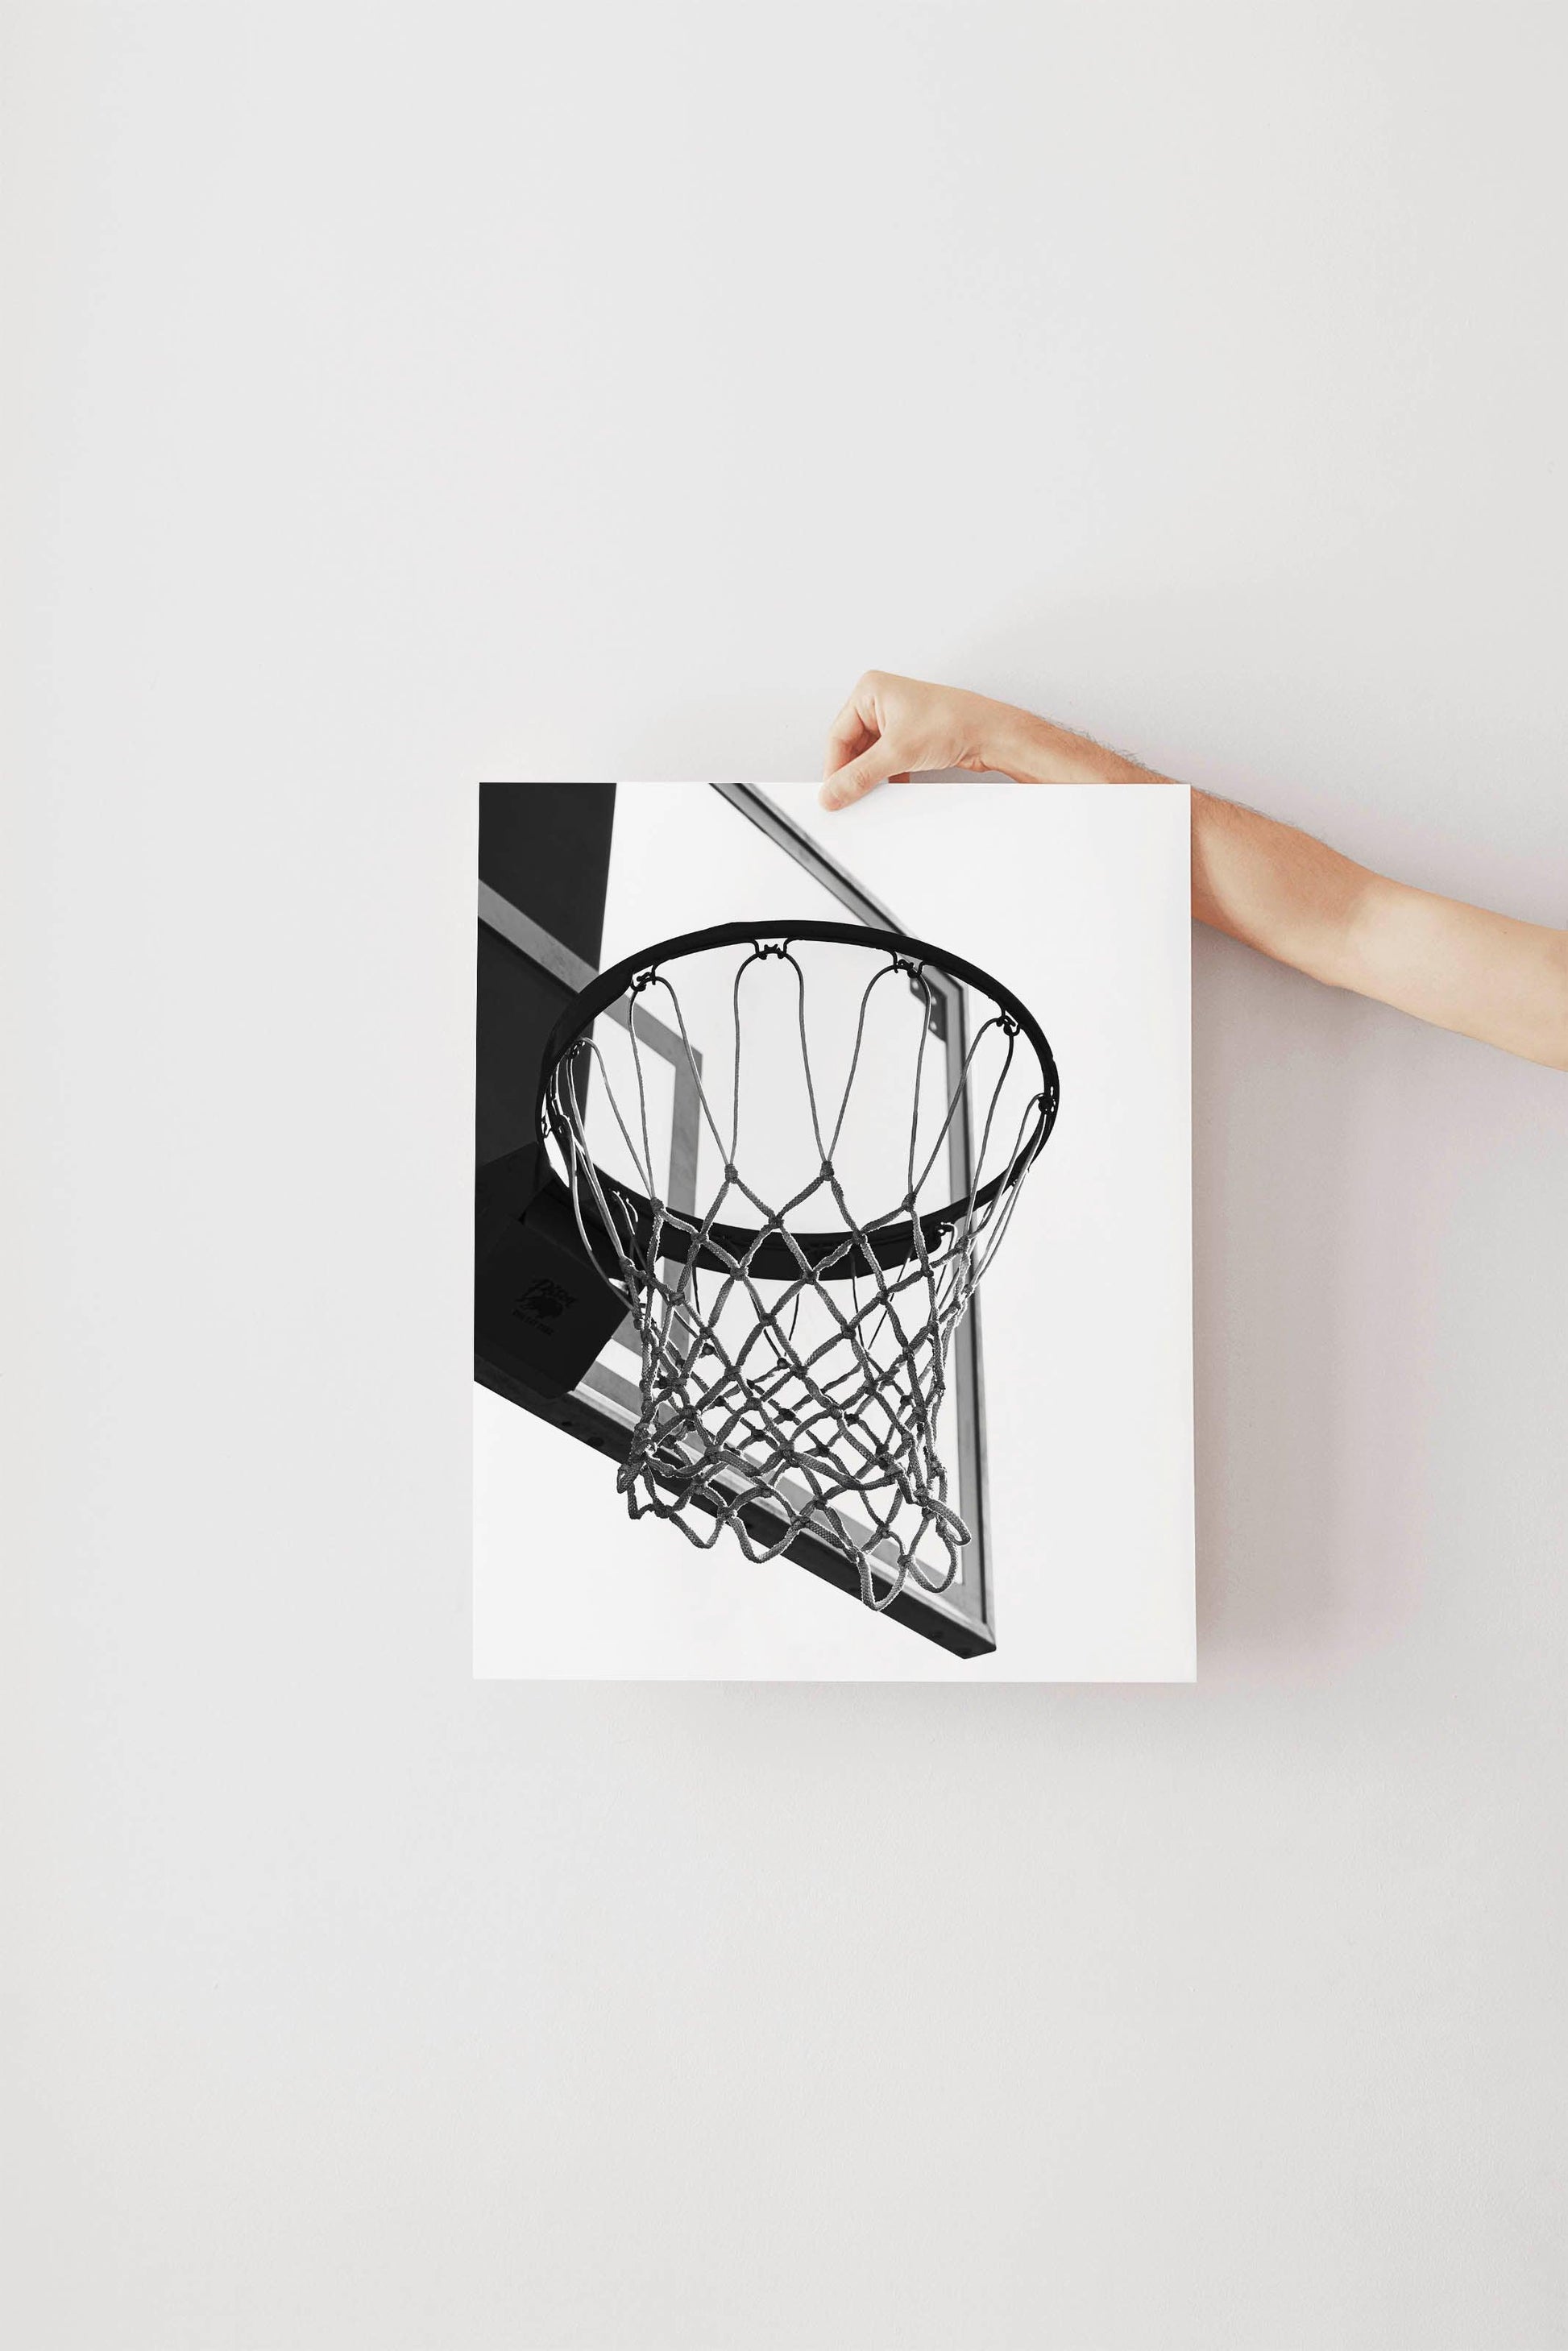 Black and White Basketball Hoop Print - Departures Print Shop